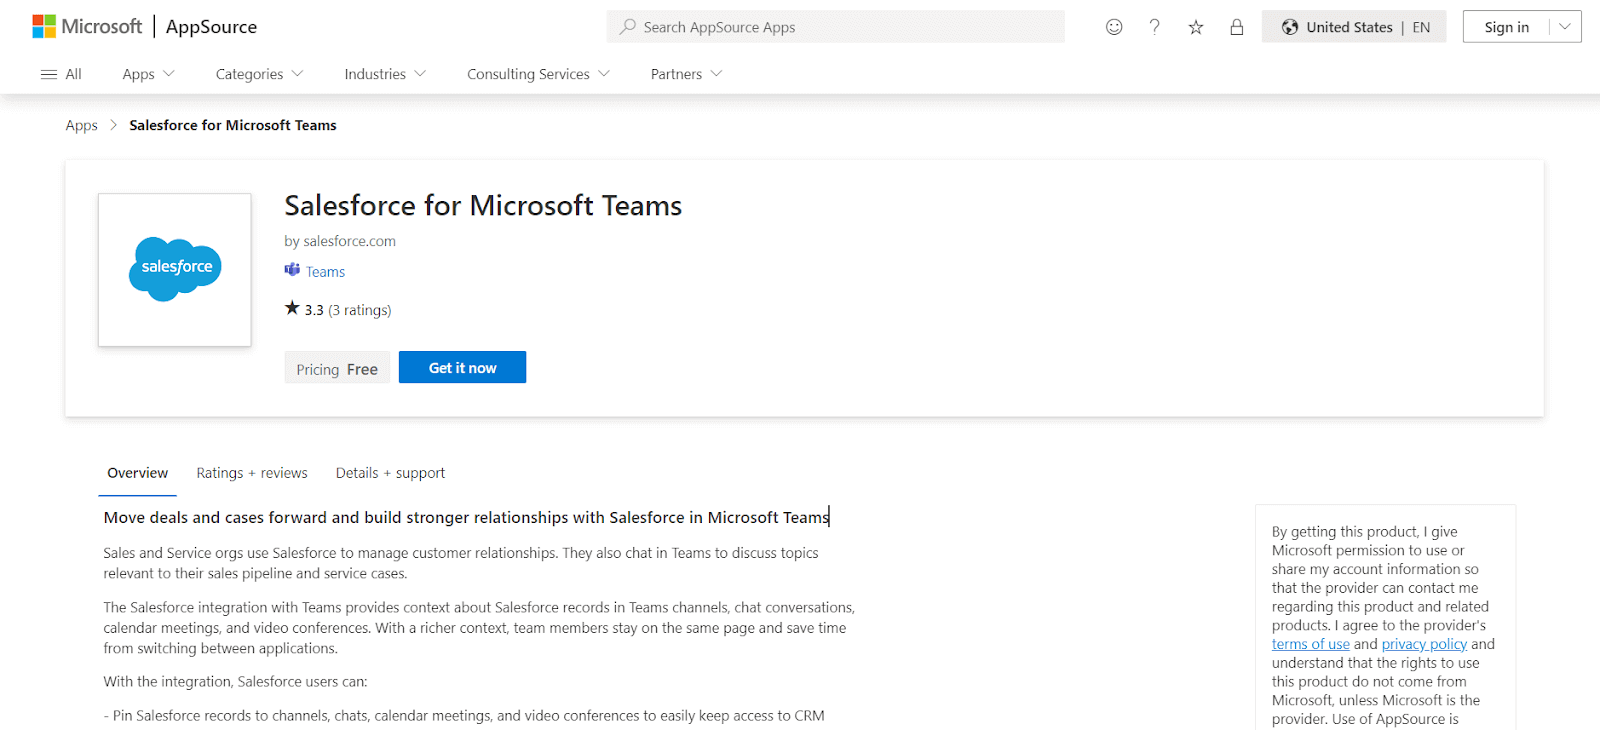 Salesforce for Microsoft Teams